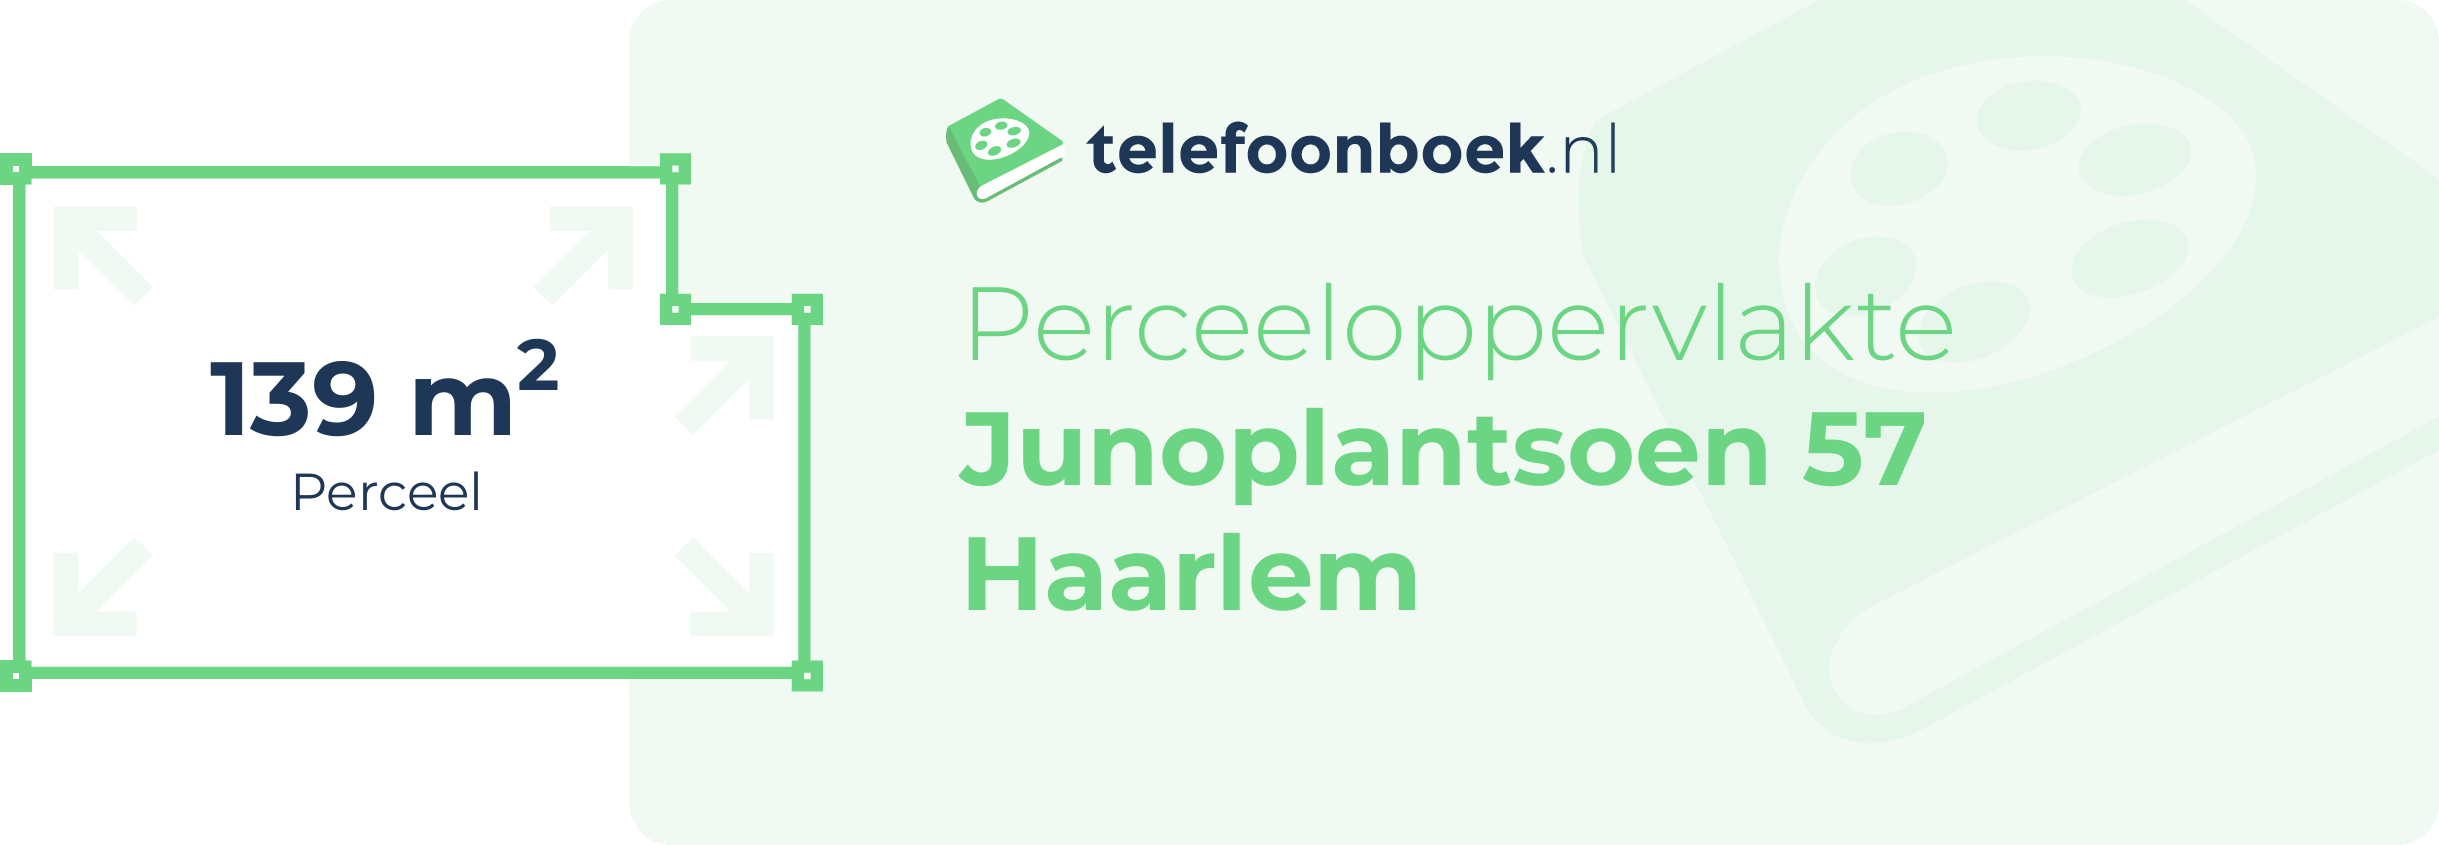 Perceeloppervlakte Junoplantsoen 57 Haarlem